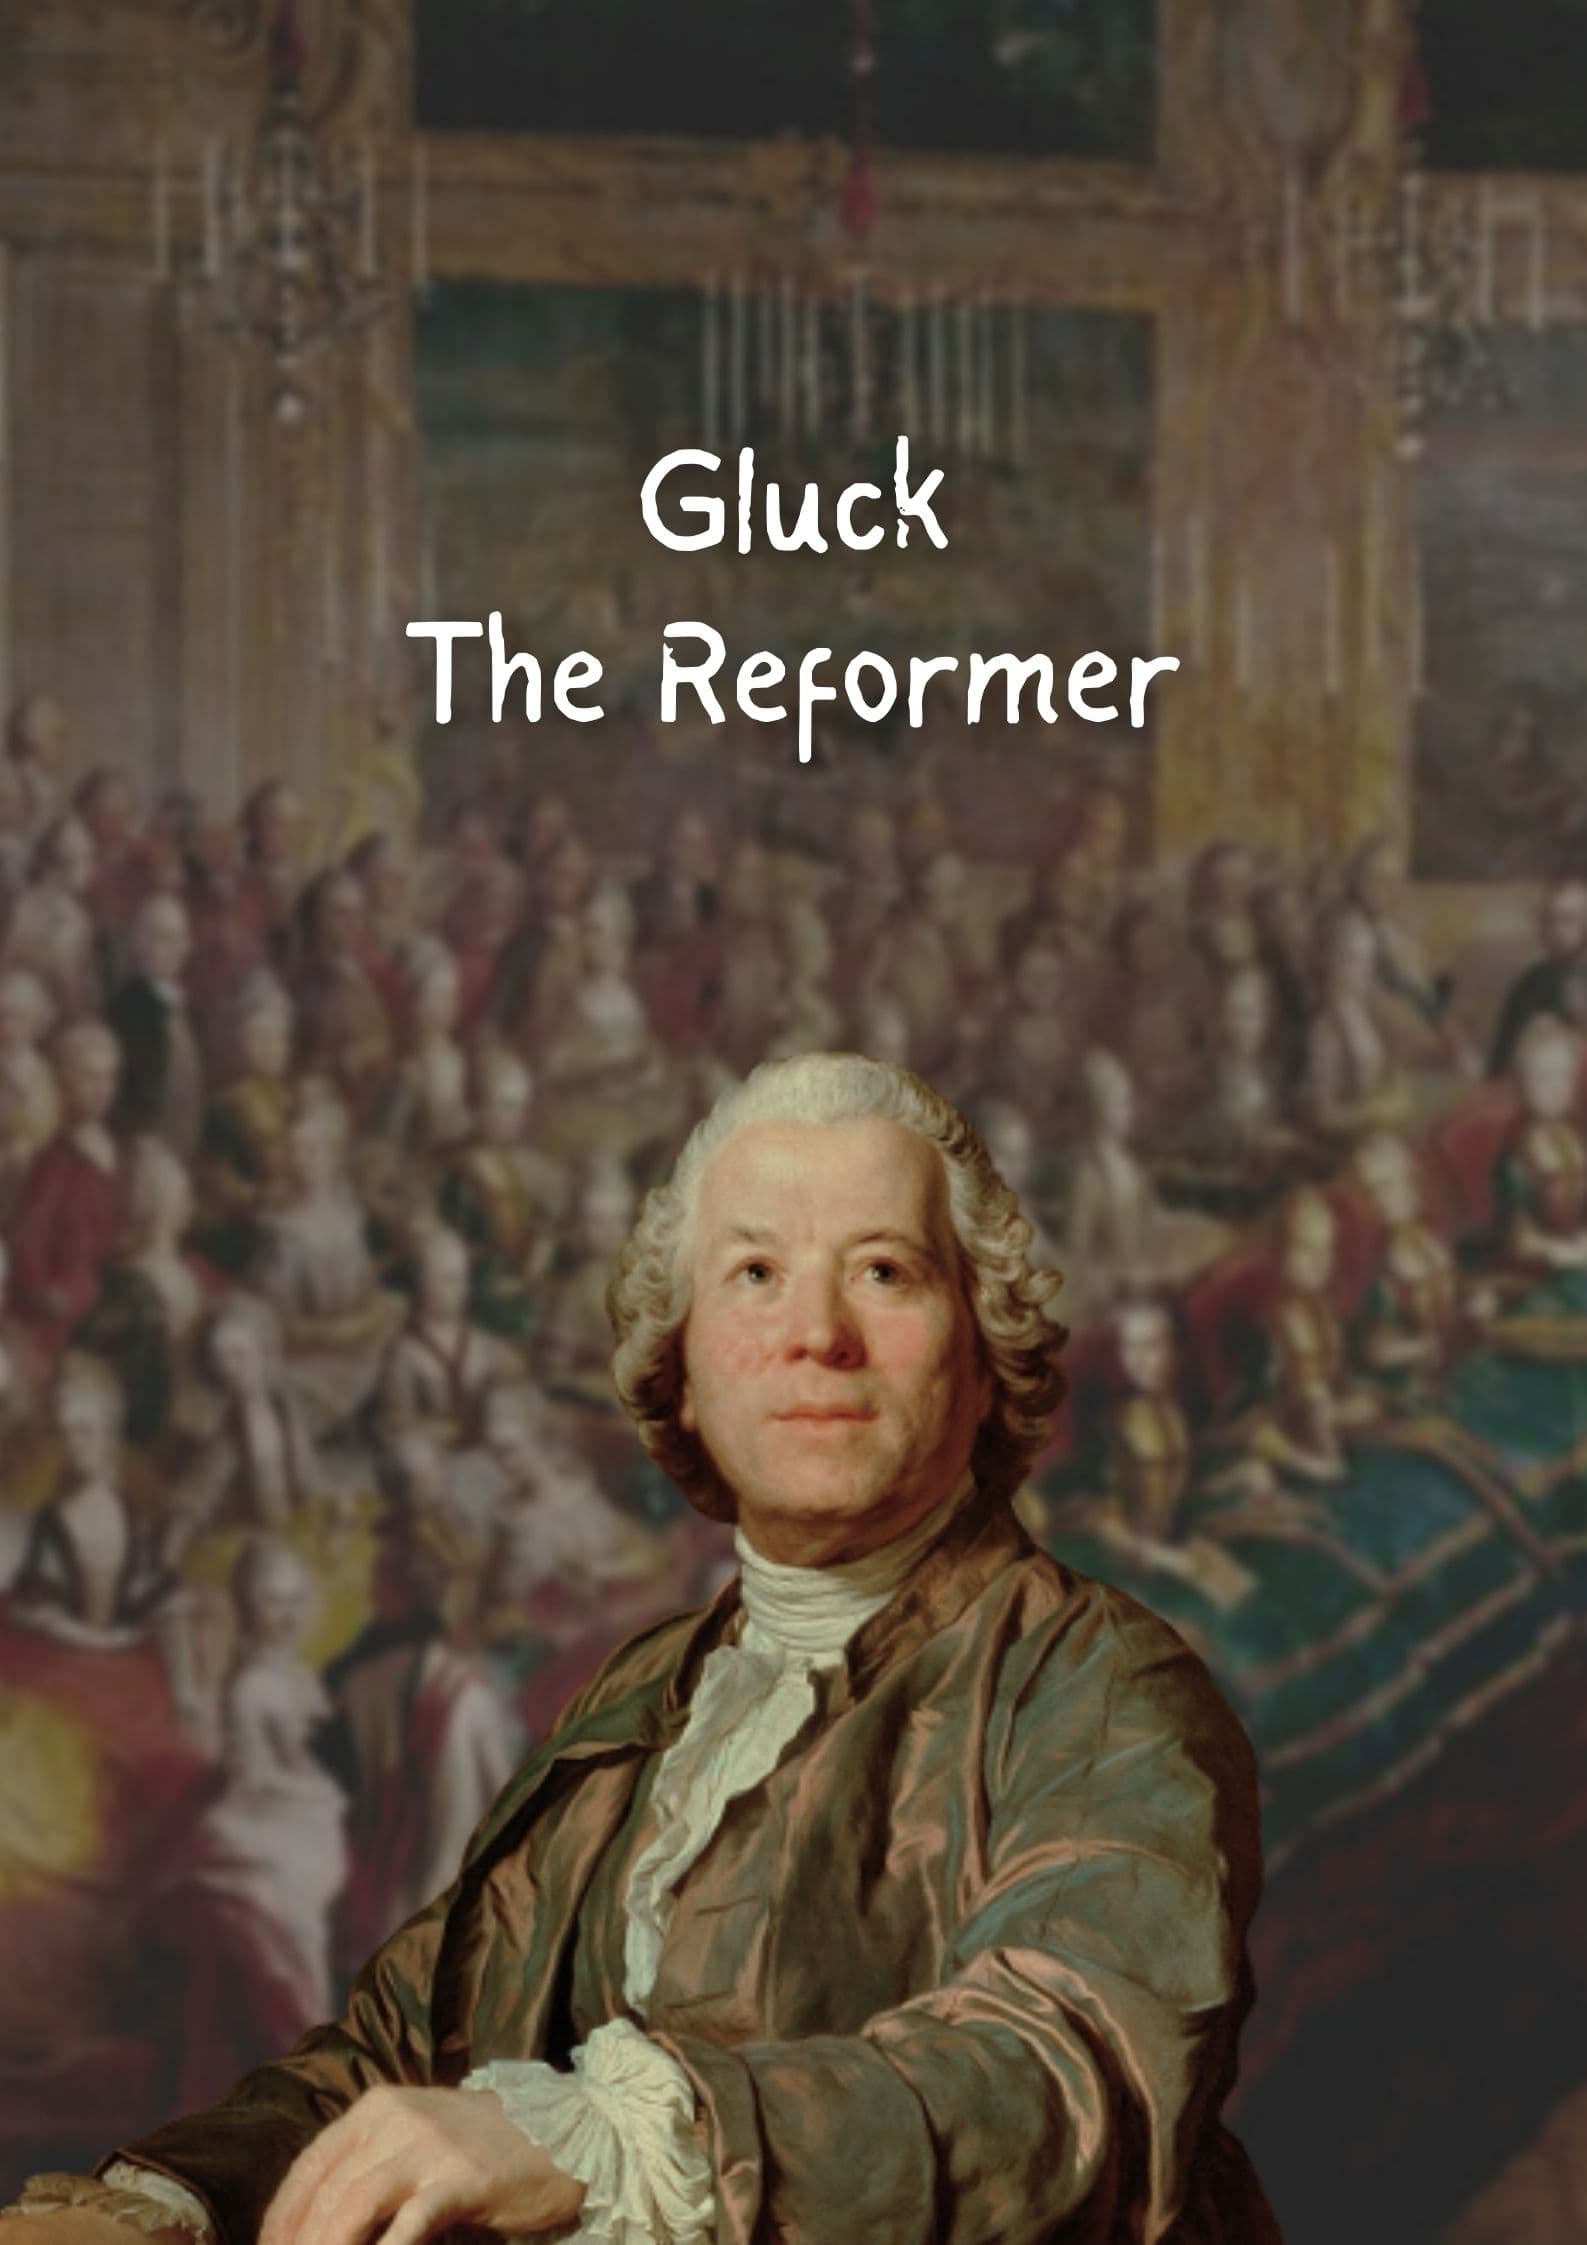 Gluck the Reformer